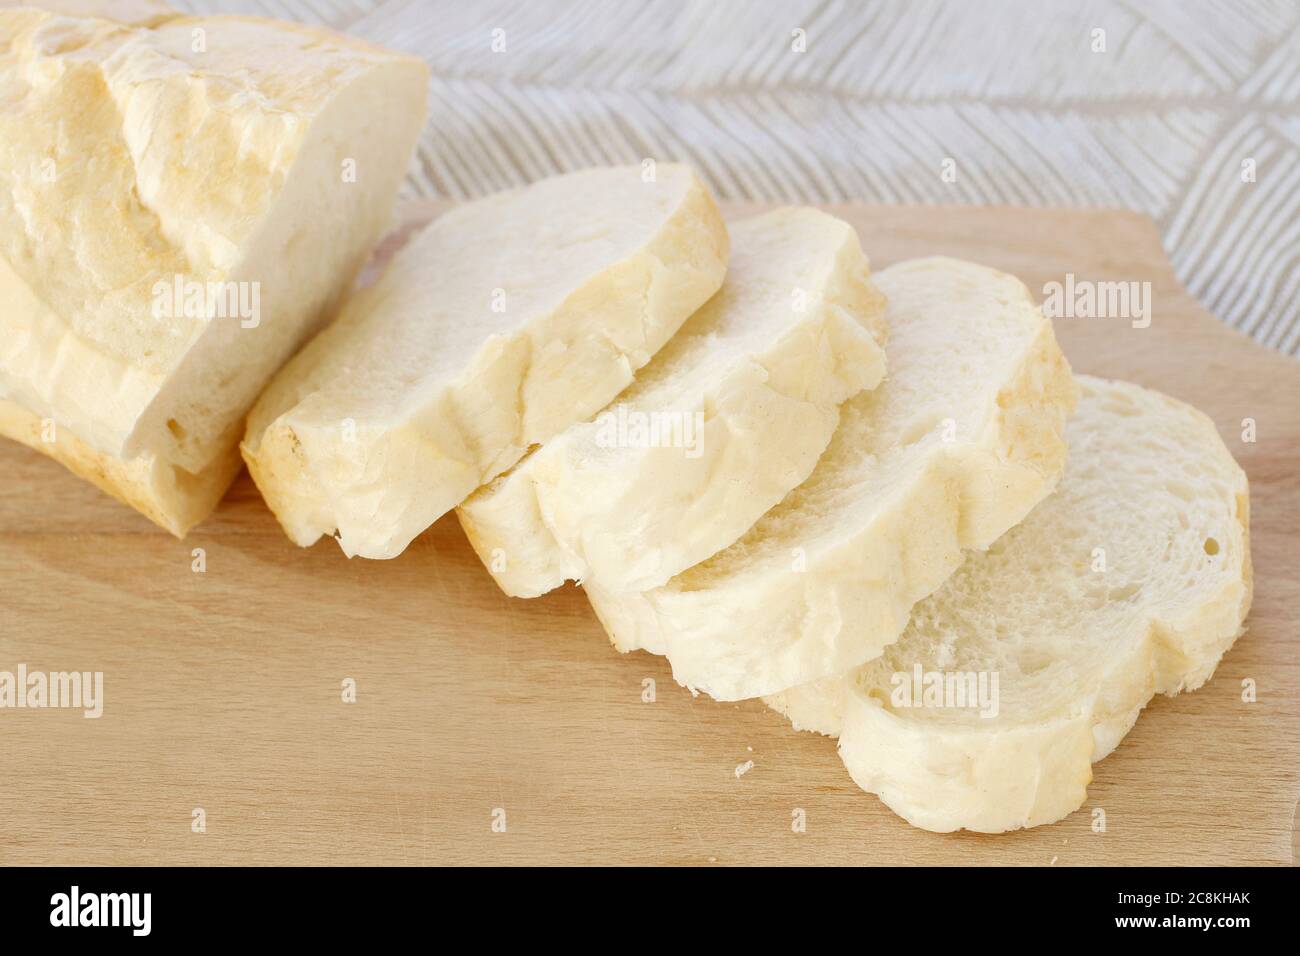 Sliced bread on wooden cutting board. Breakfast time Stock Photo